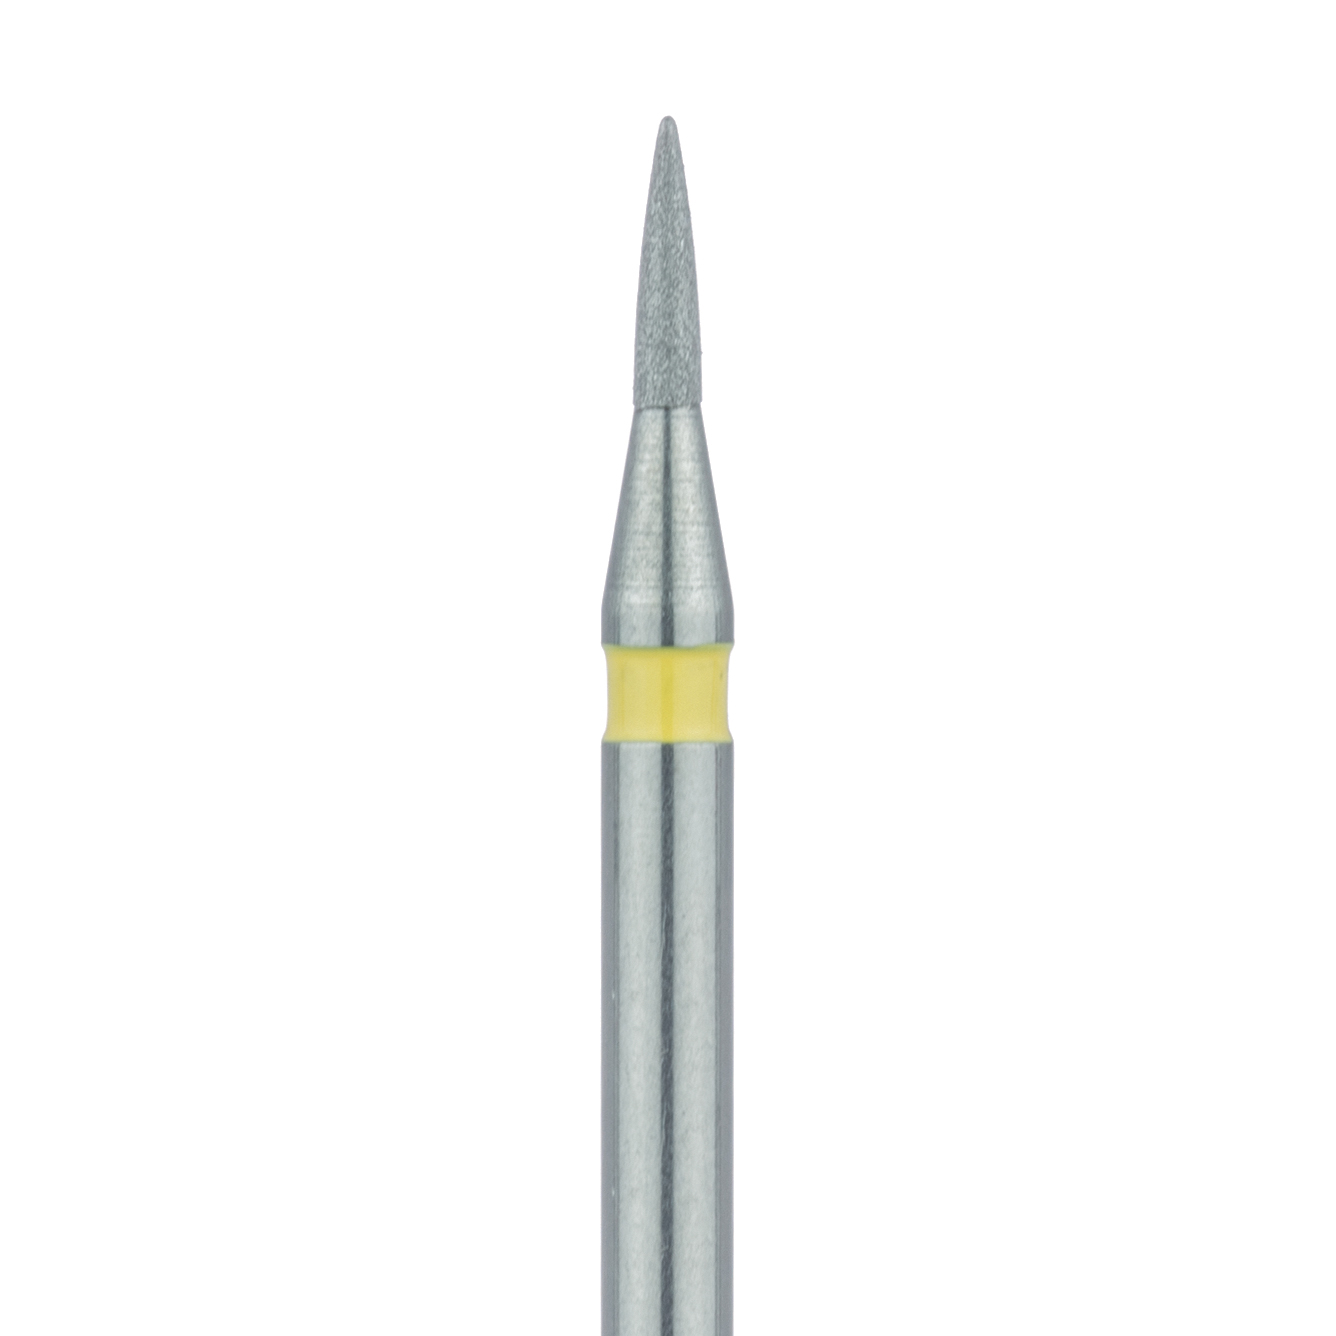 860C-009-FG Short Flame Diamond Bur, 0.9mm Ø, Extra Fine, FG